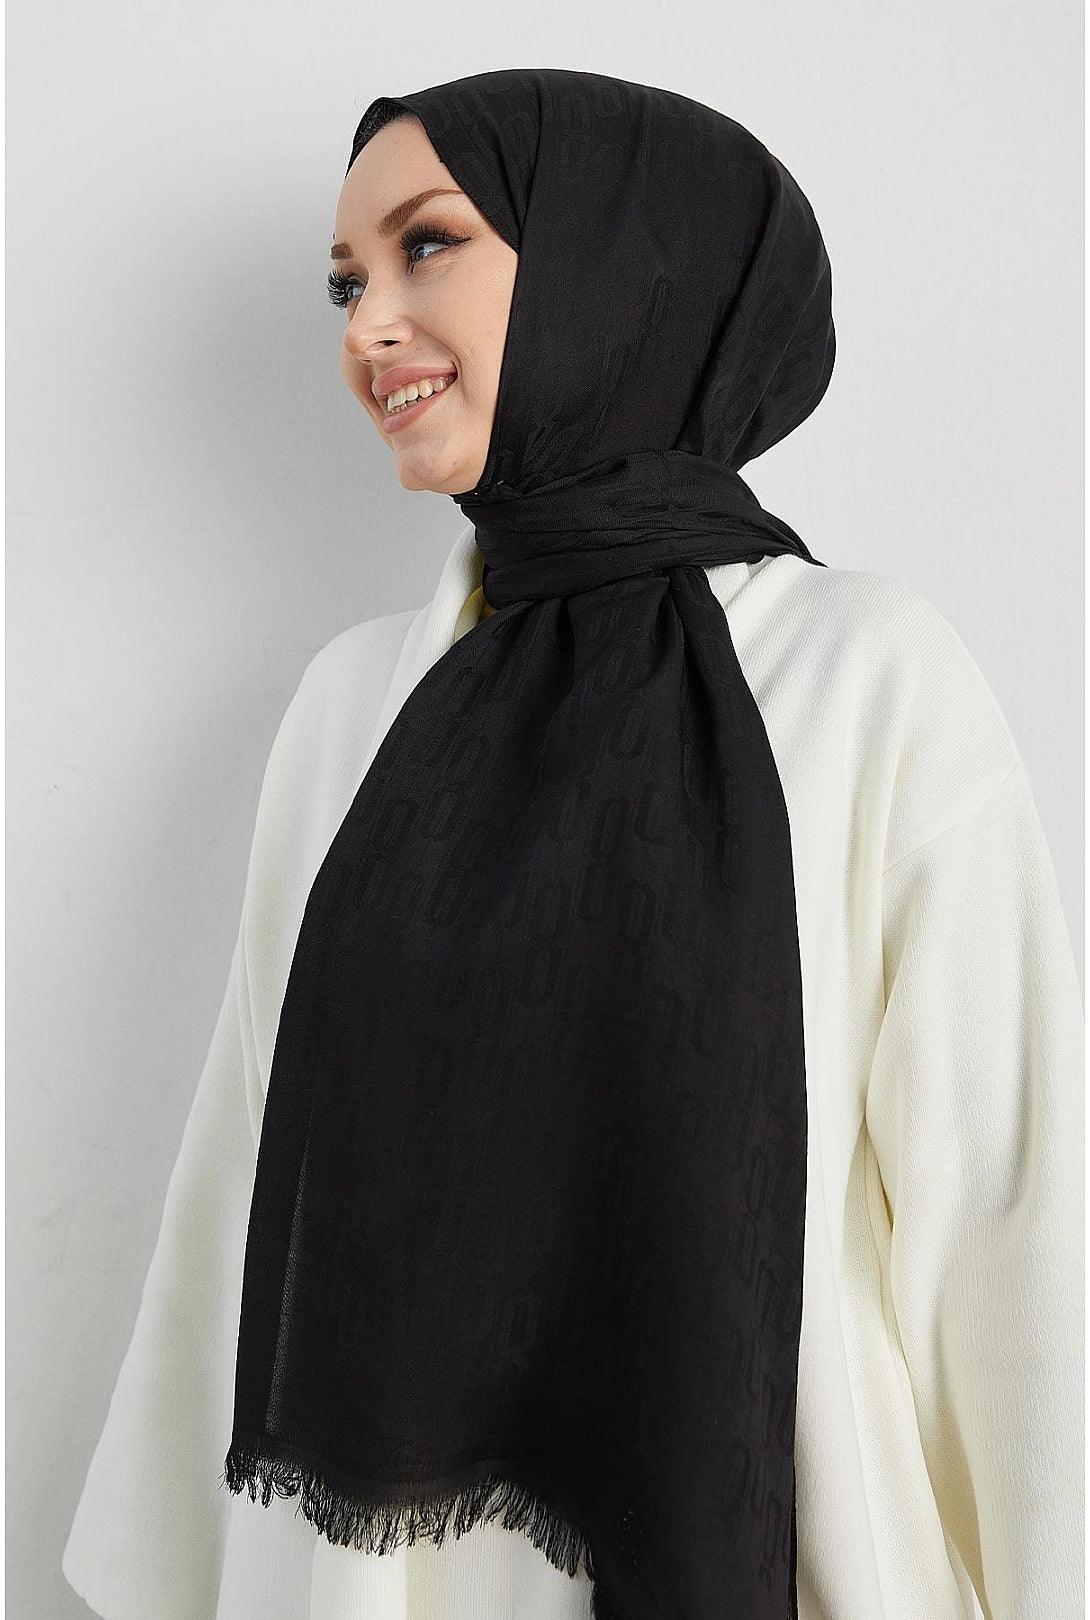 Silky Black Hijab Scarf Shawl with Chain Pattern - Black